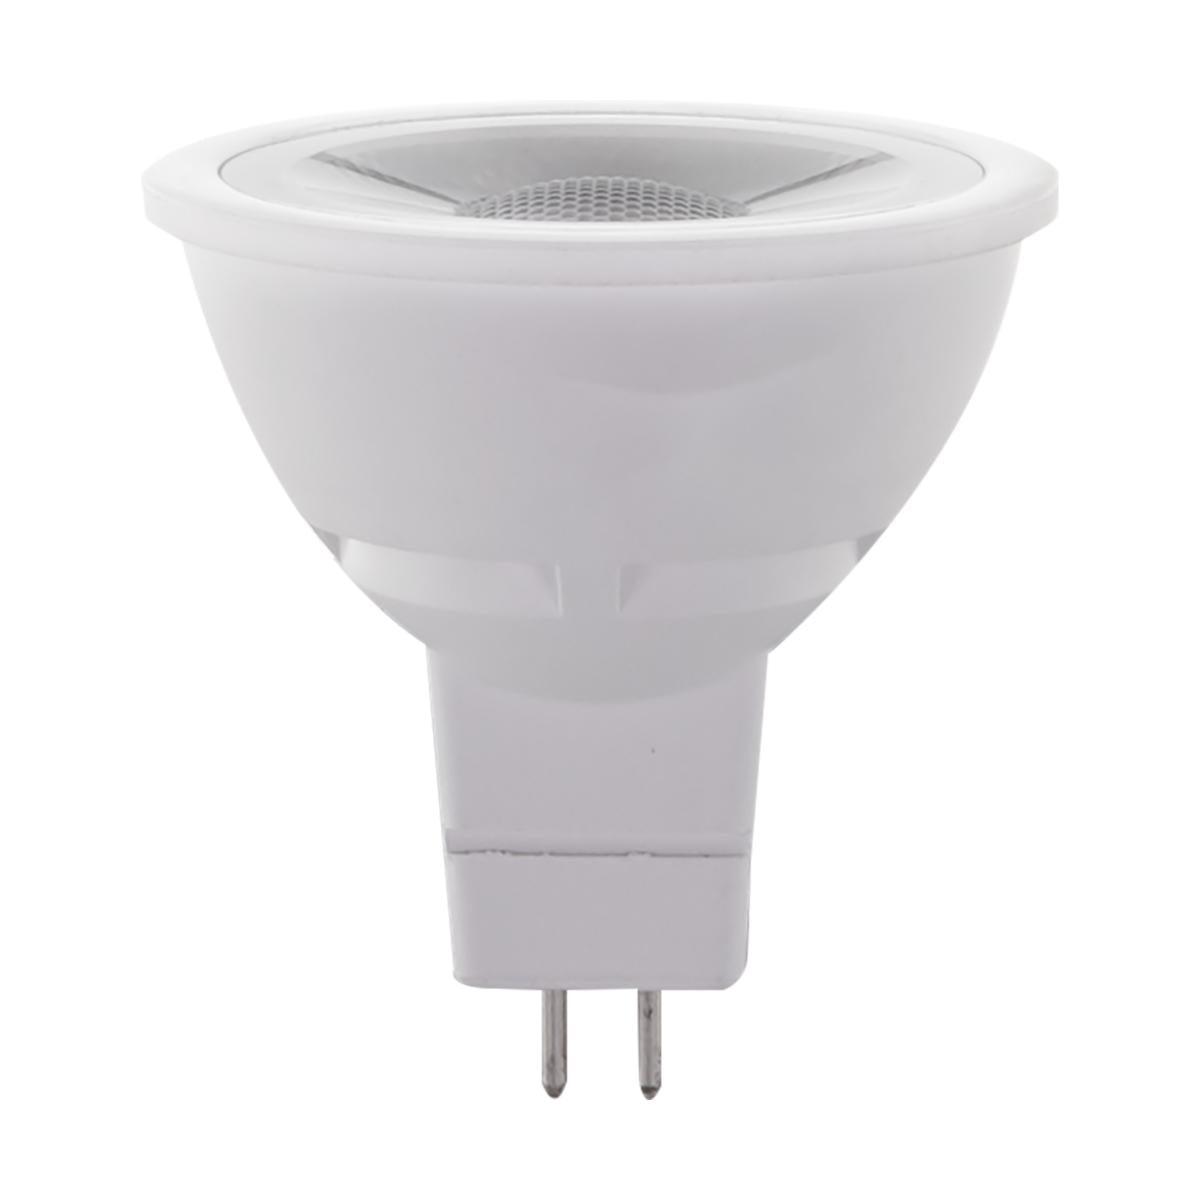 LED MR16 Reflector Bulb, 7 Watt, 600 Lumens, 3000K, GU5.3 Base, Frosted Finish, Pack Of 2